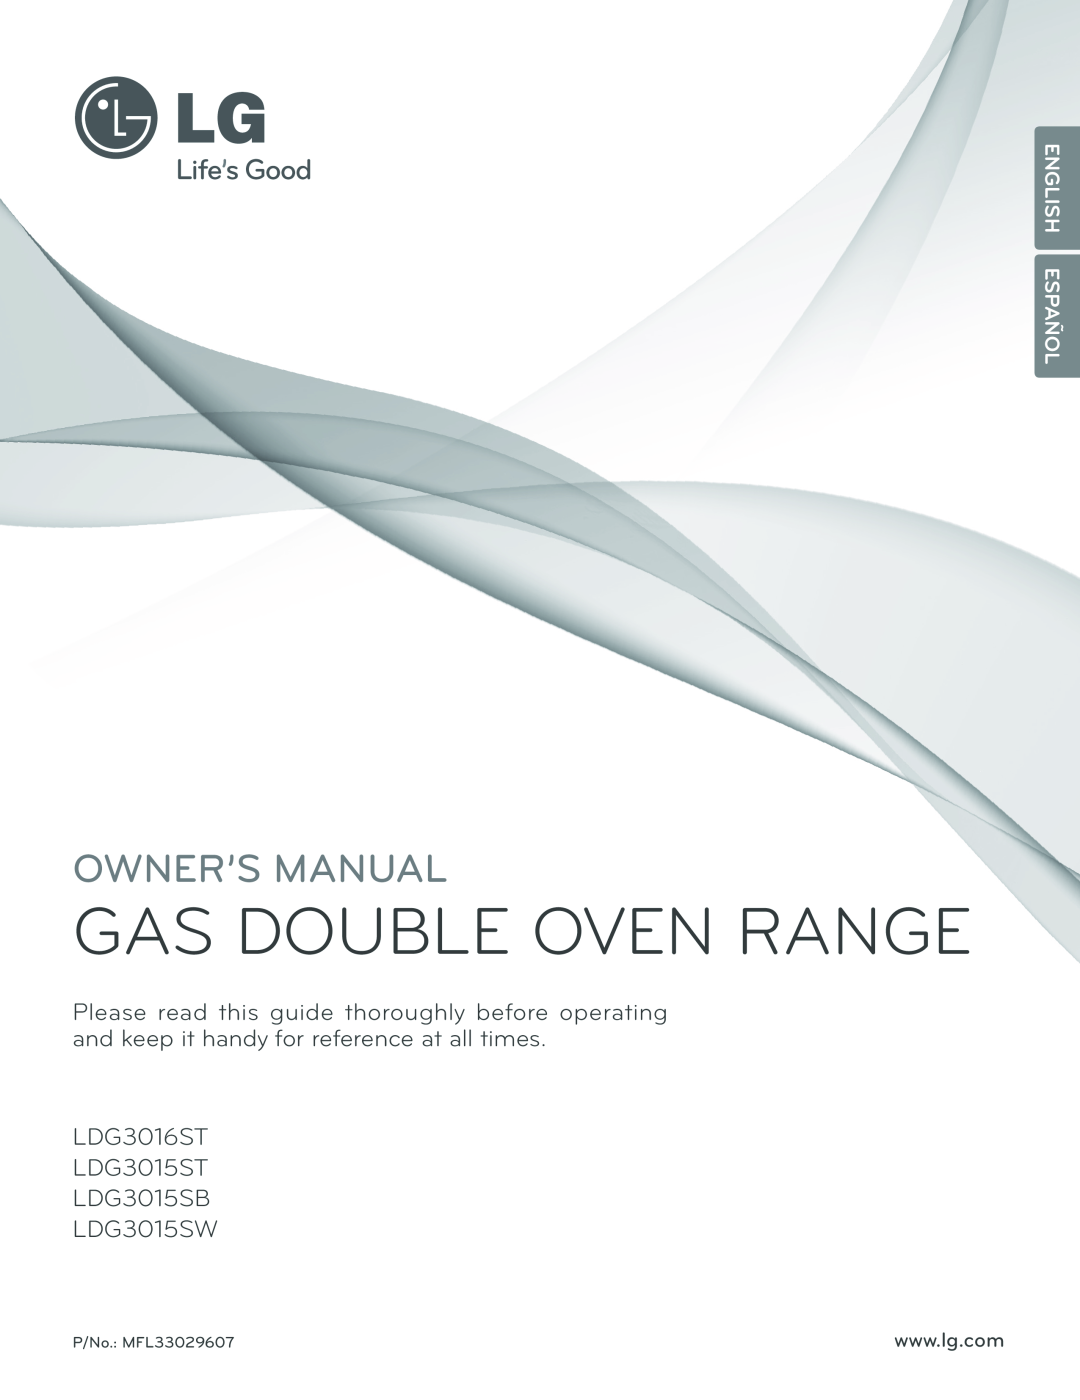 LG Electronics owner manual Gas Double Oven Range, LDG3016ST LDG3015ST LDG3015SB LDG3015SW, English Español 